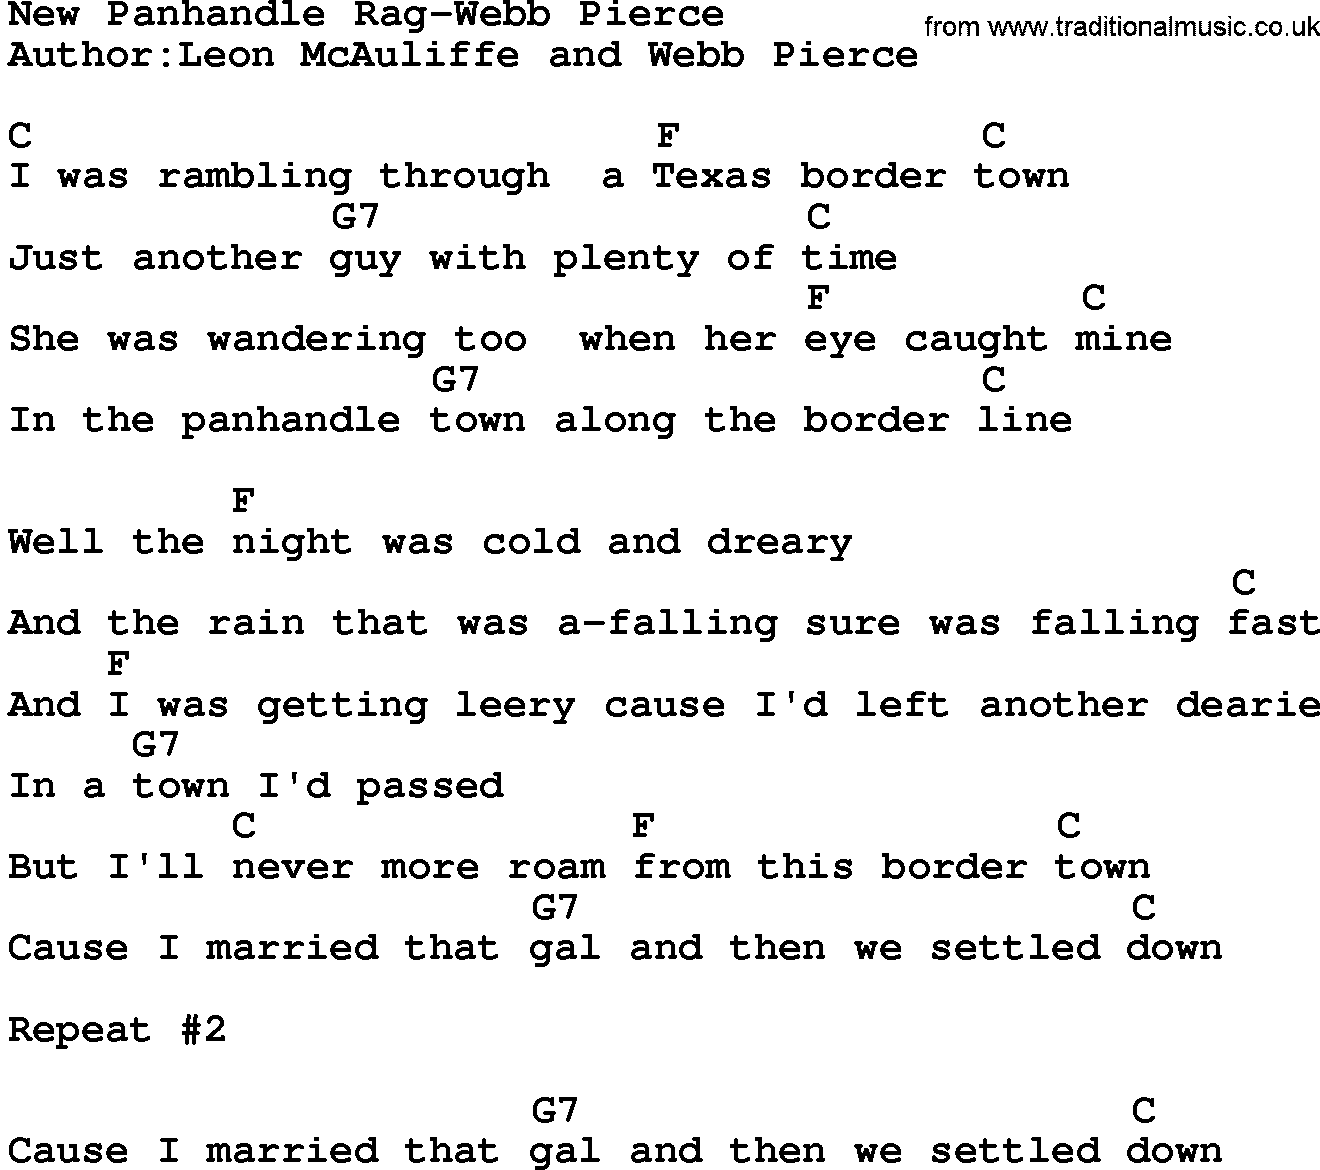 Country music song: New Panhandle Rag-Webb Pierce lyrics and chords